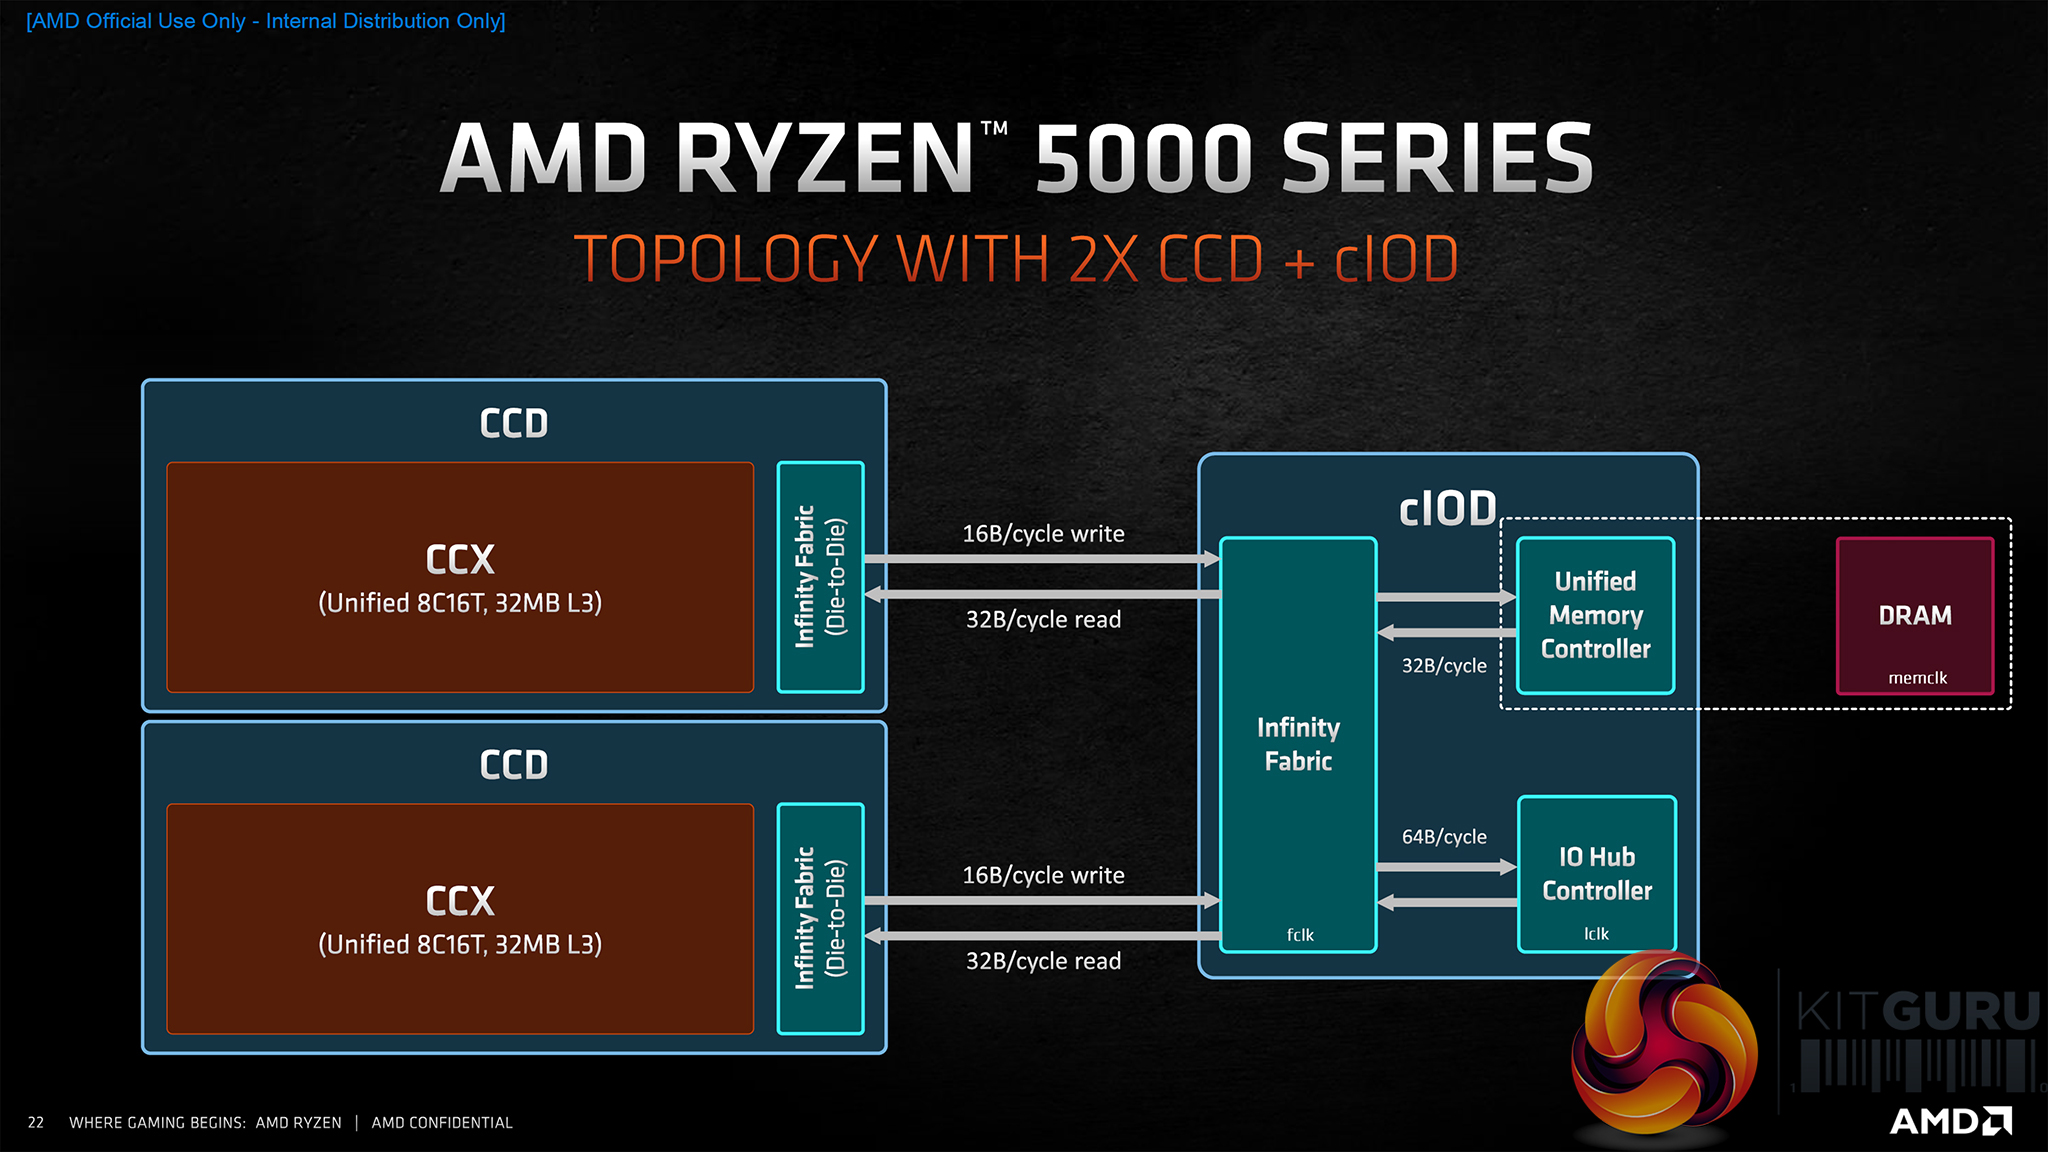 AMD Ryzen 7 5700X & Ryzen 5 5600 Review